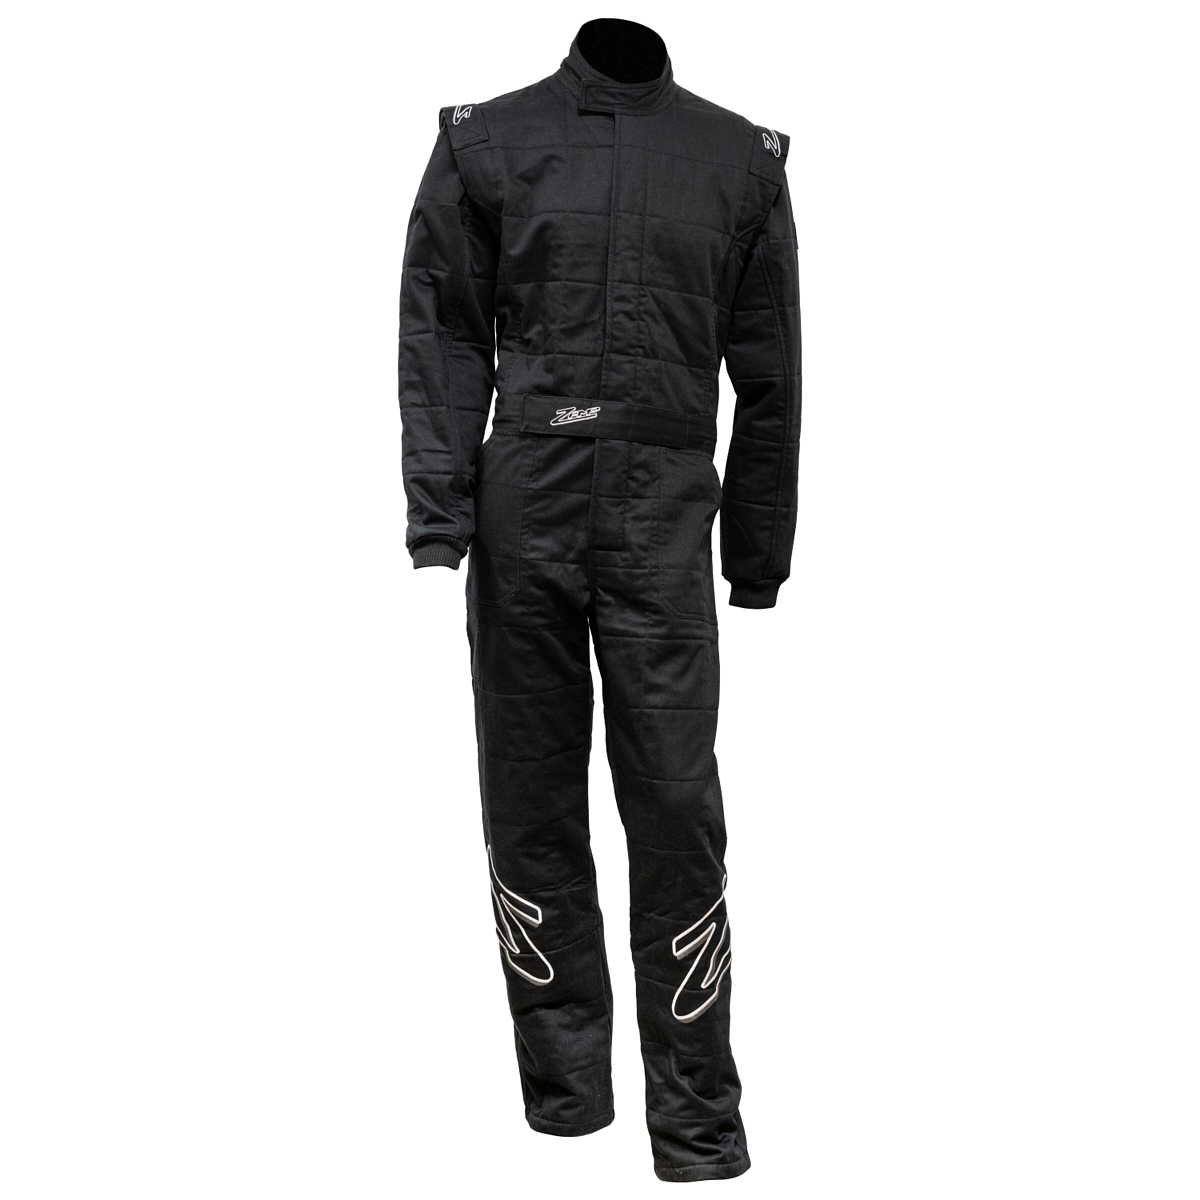 ZAMP Suit ZR-30 3X-Lrg Black SFI3.2A/5